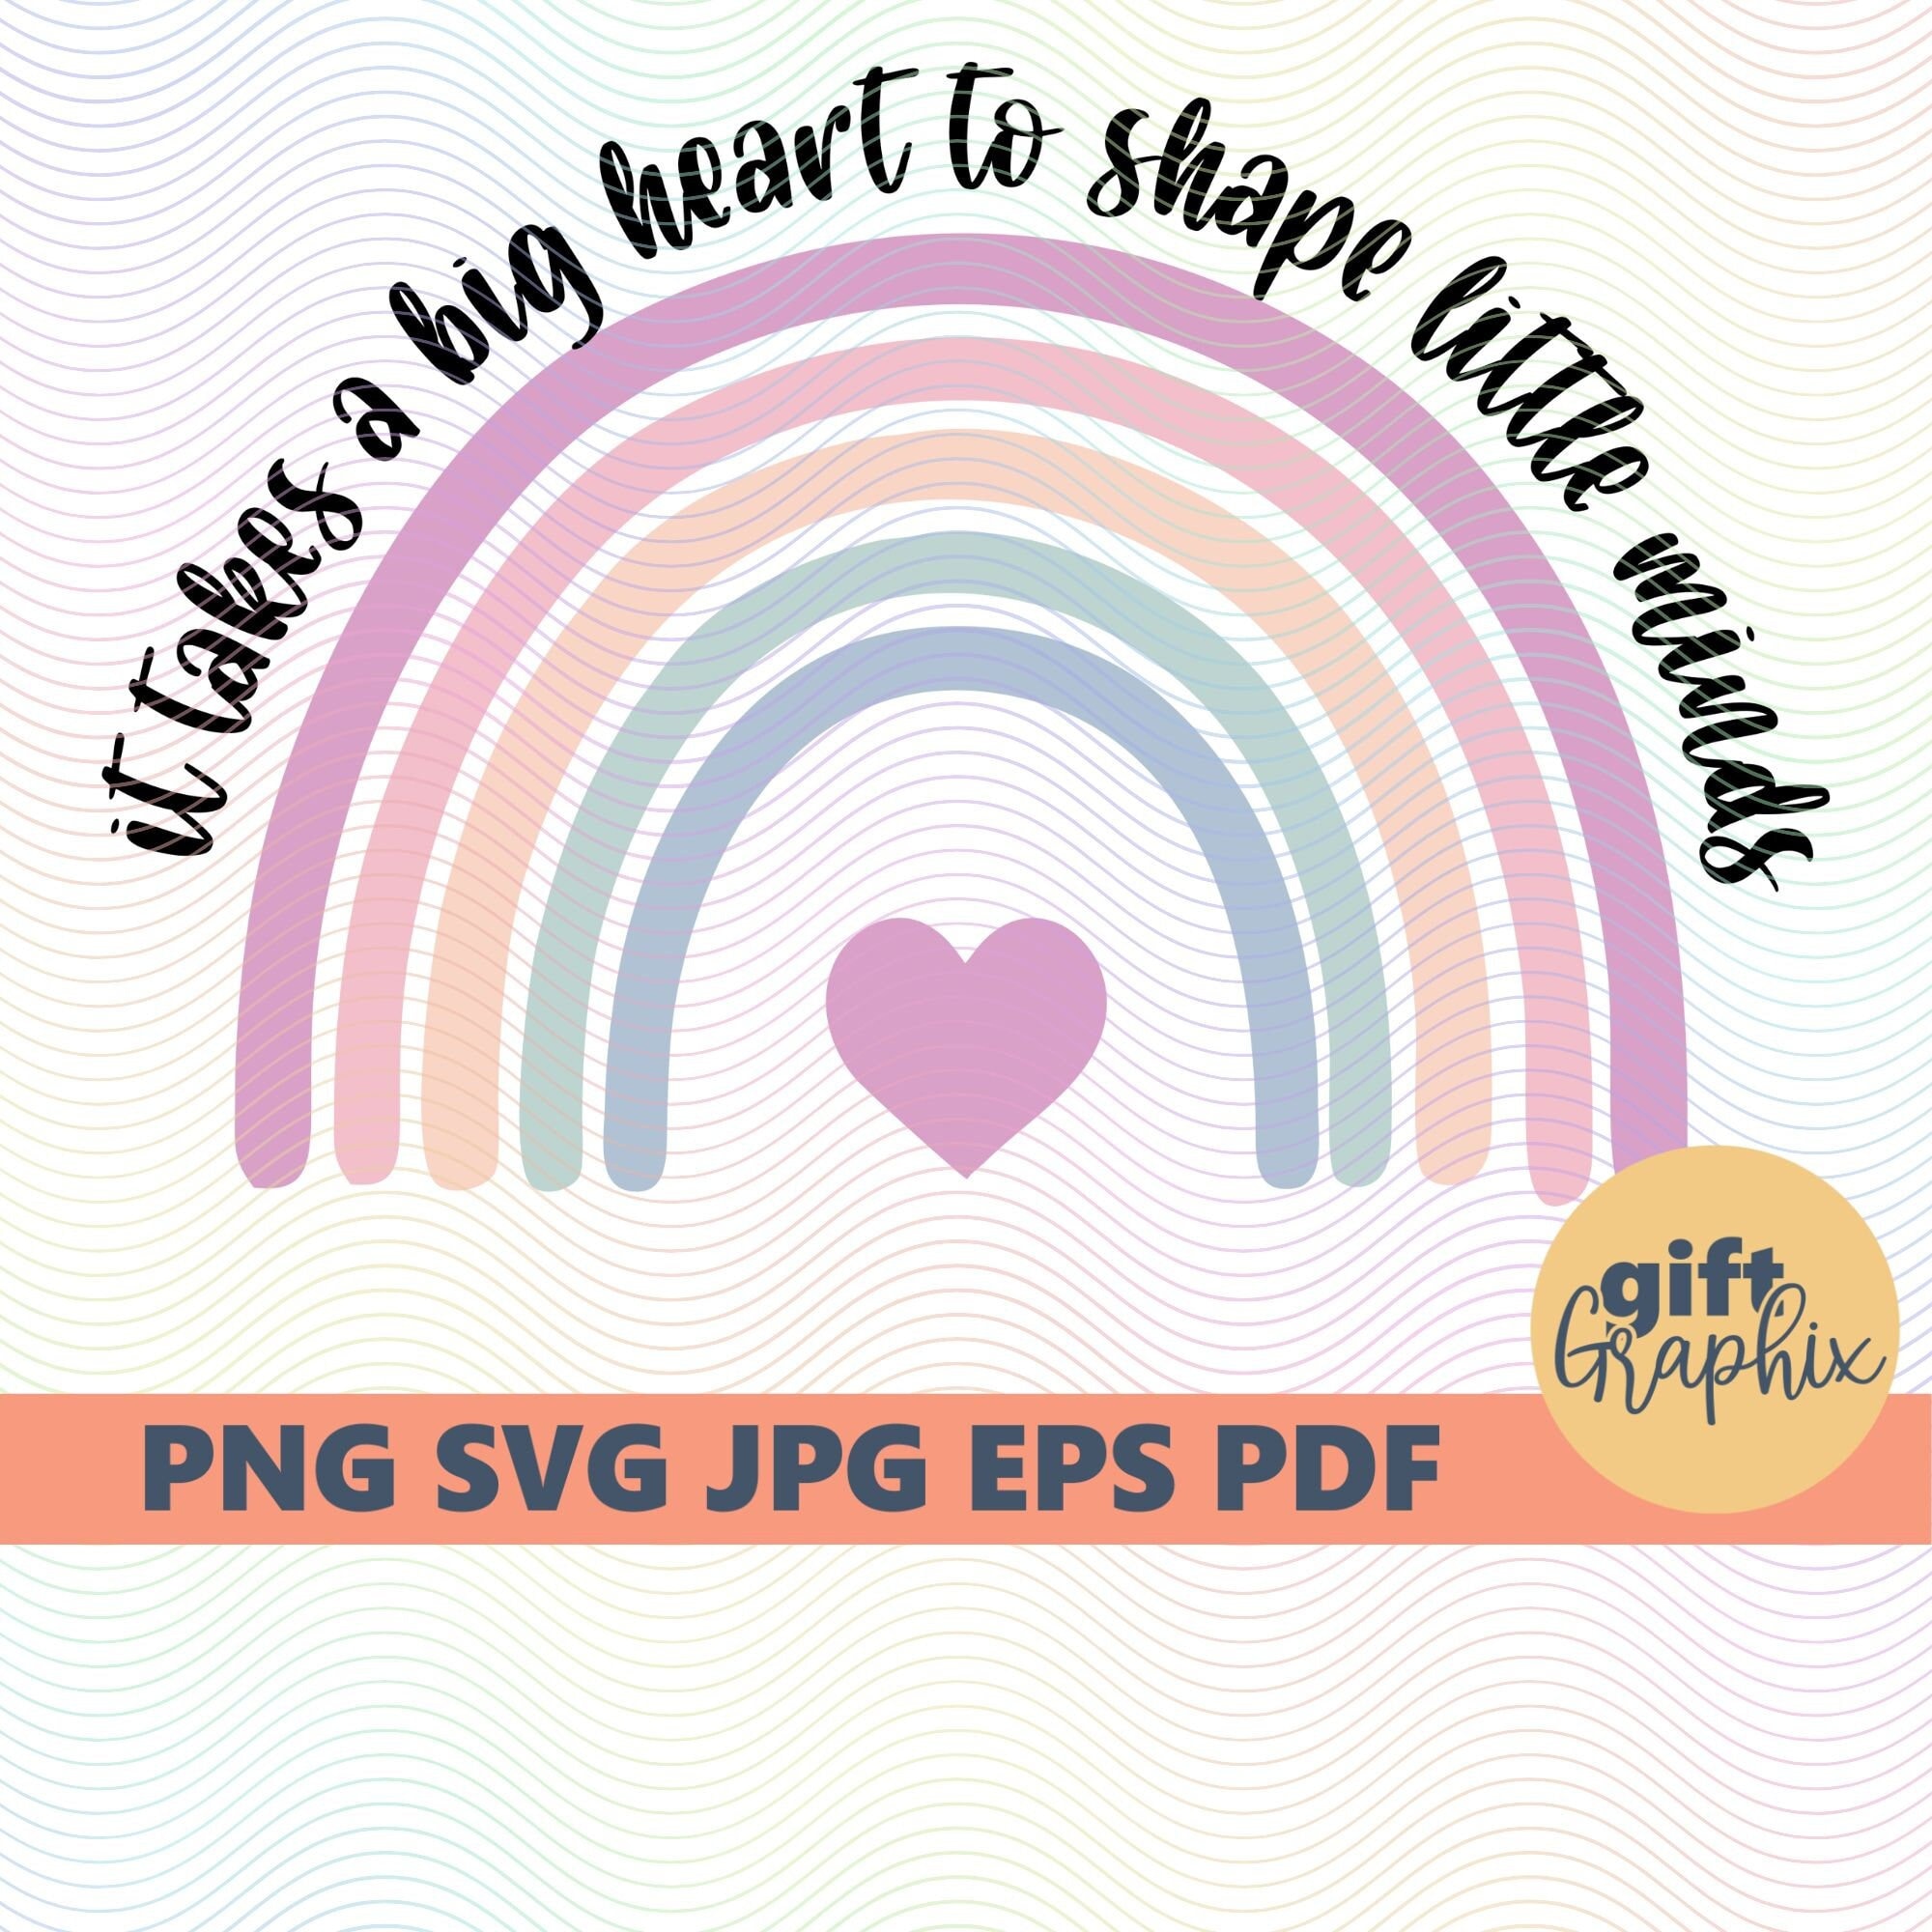 Mini Rainbow Heart Stickers